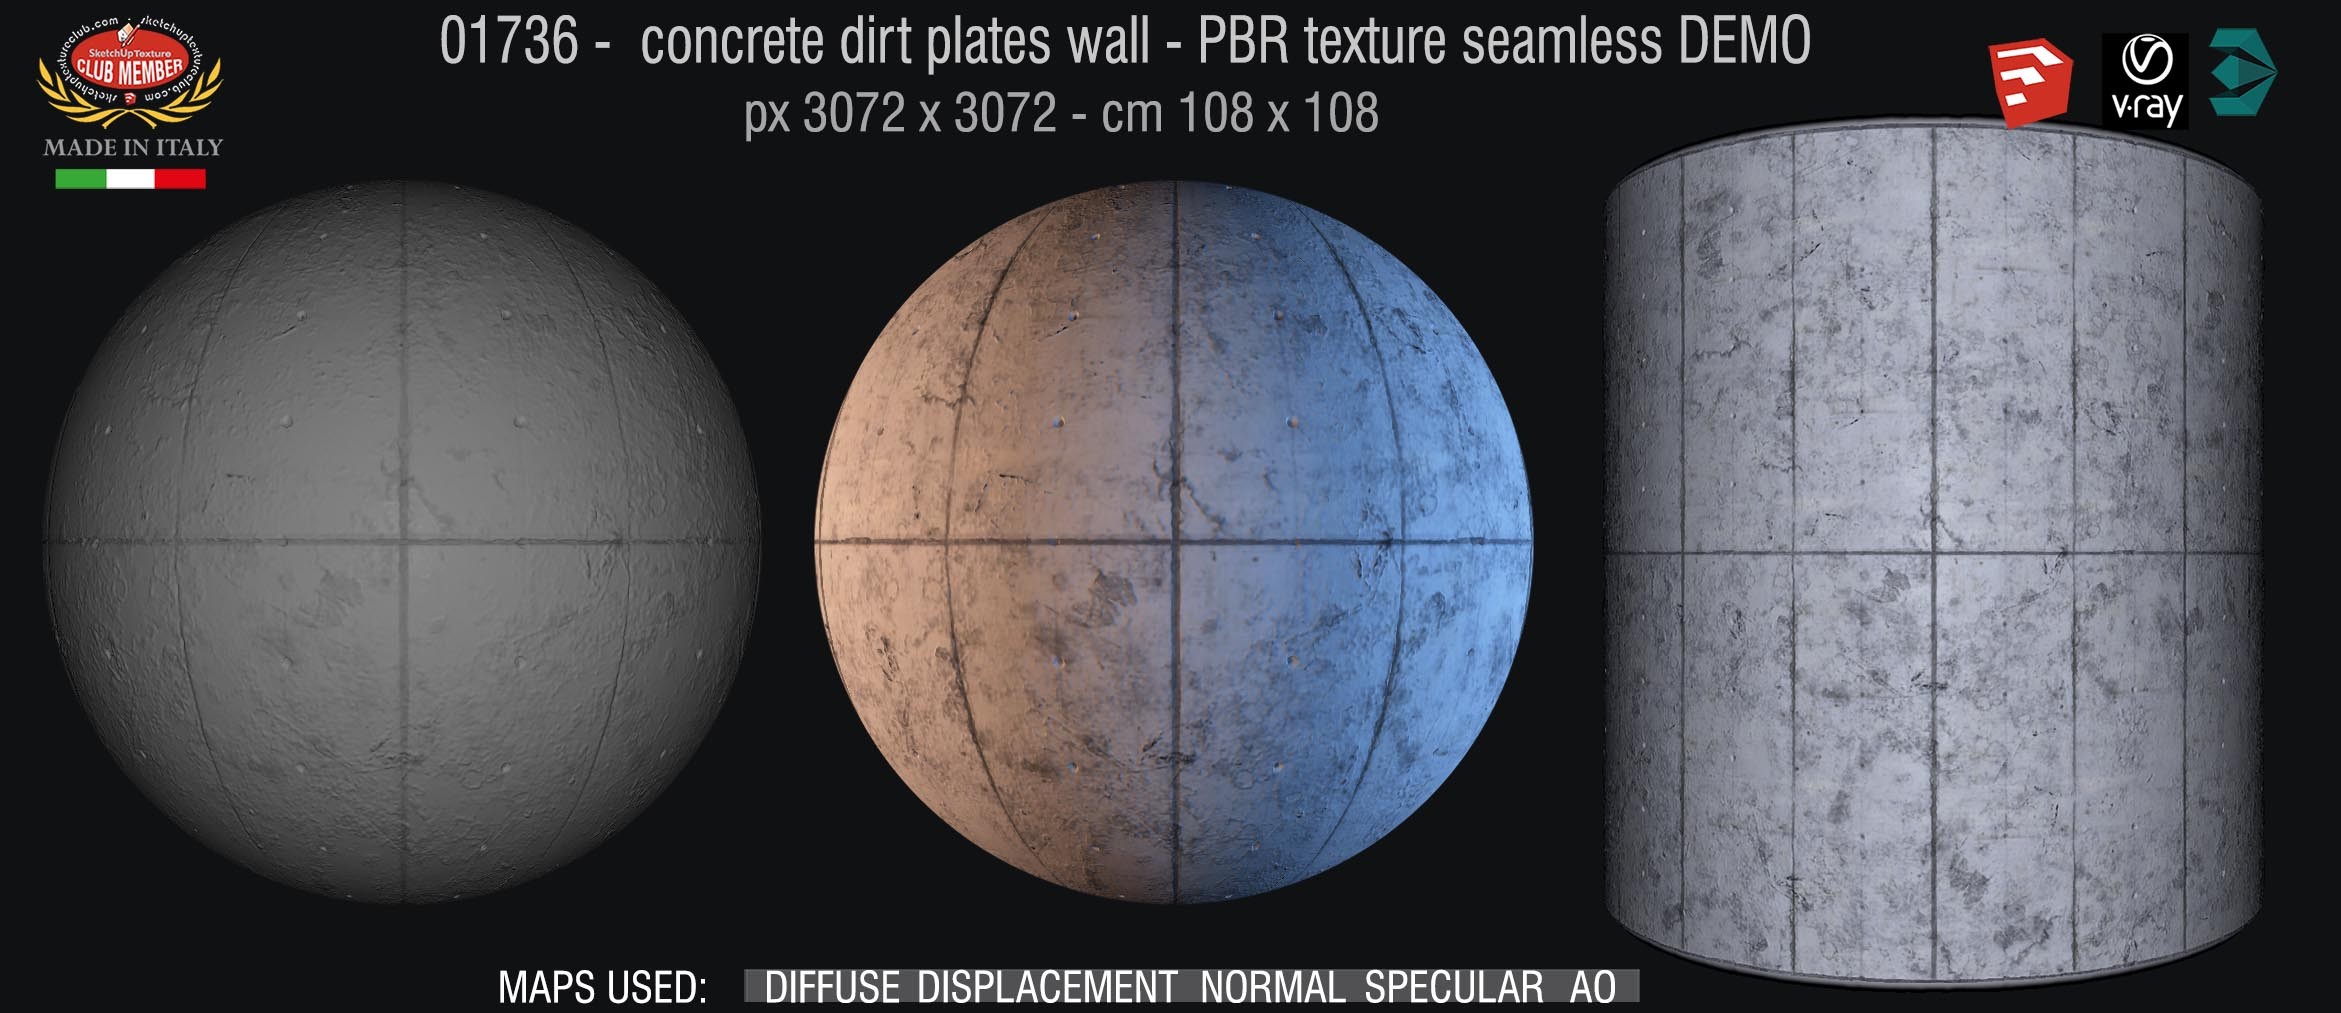 01736 concrete dirt plates wall PBR texture seamless DEMO